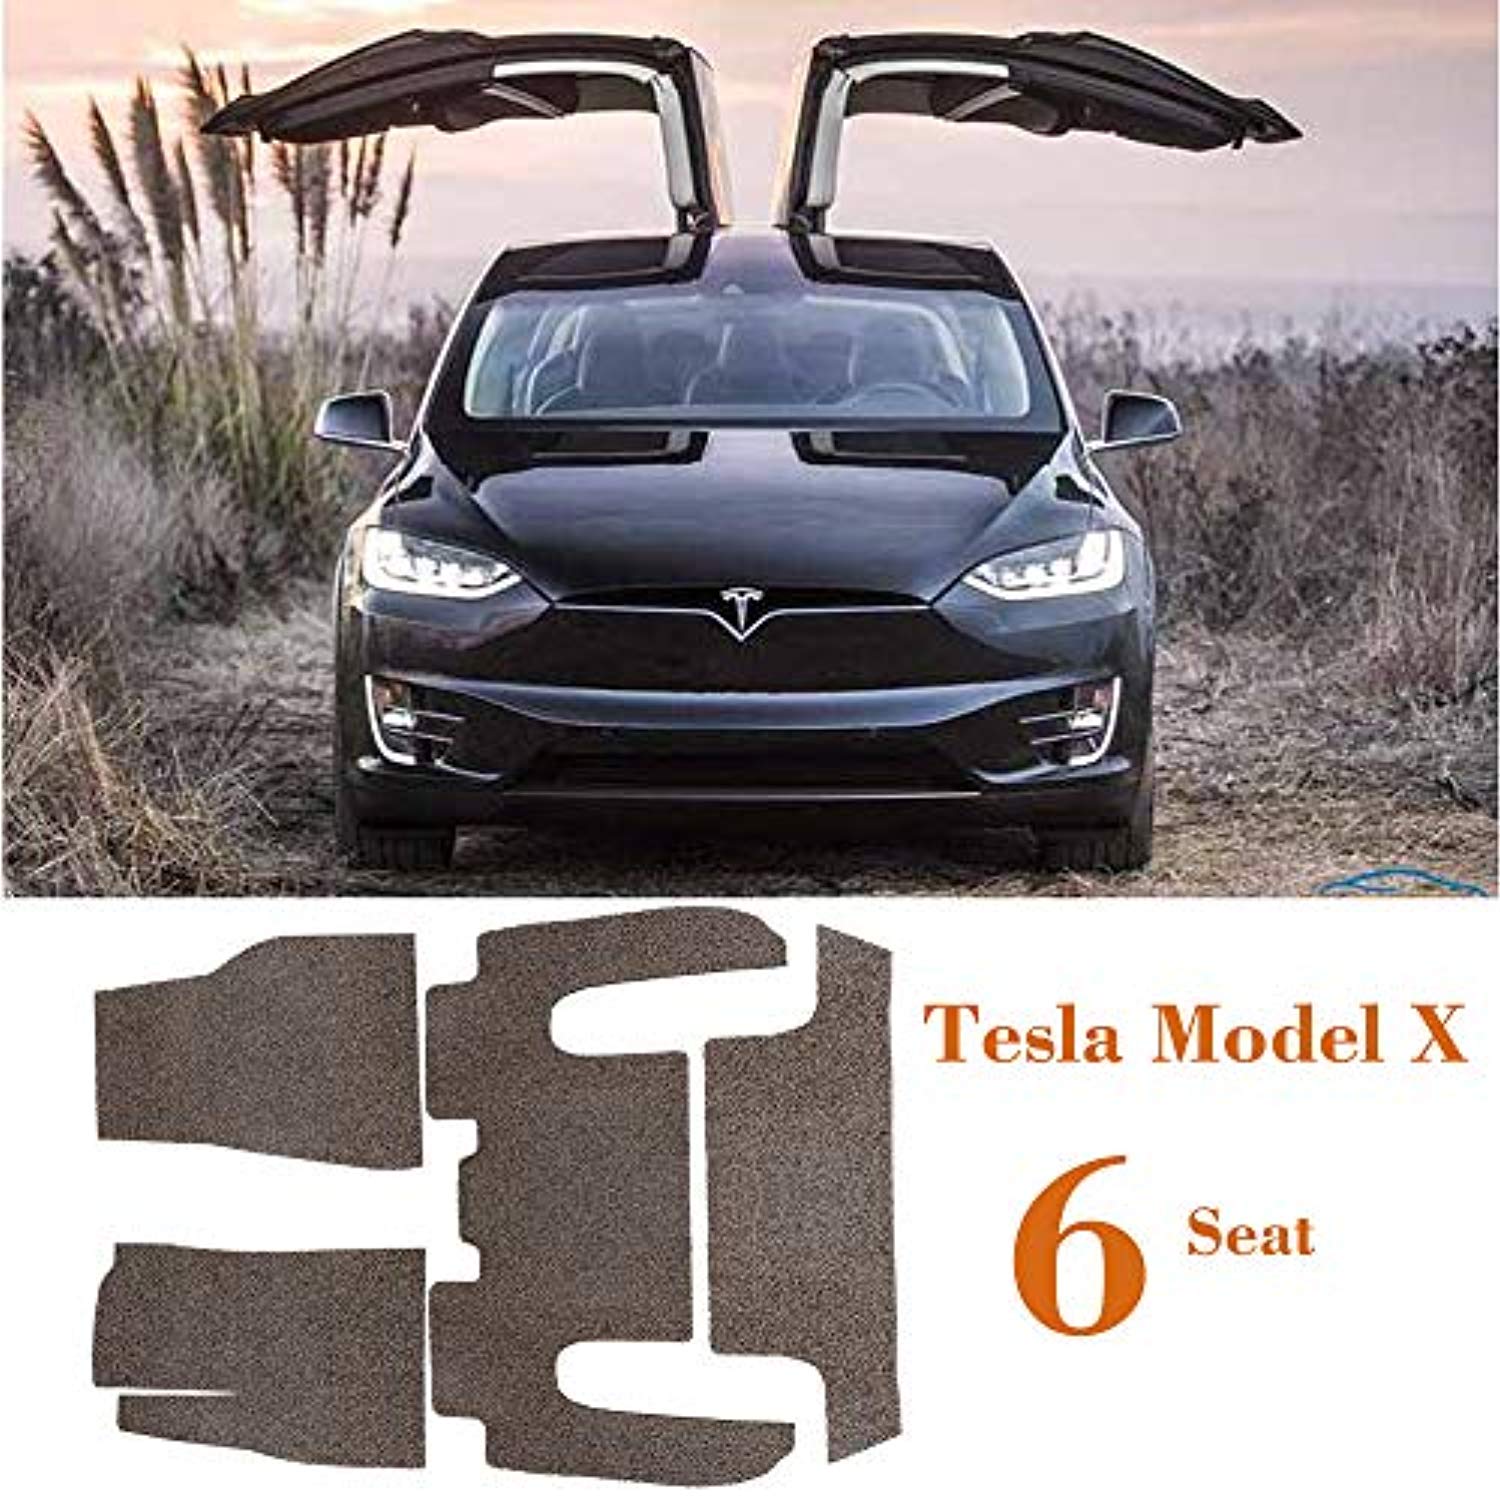 Bosonshop Tesla Model X-6 Seat Floor Mats Set, All Weather, Gray